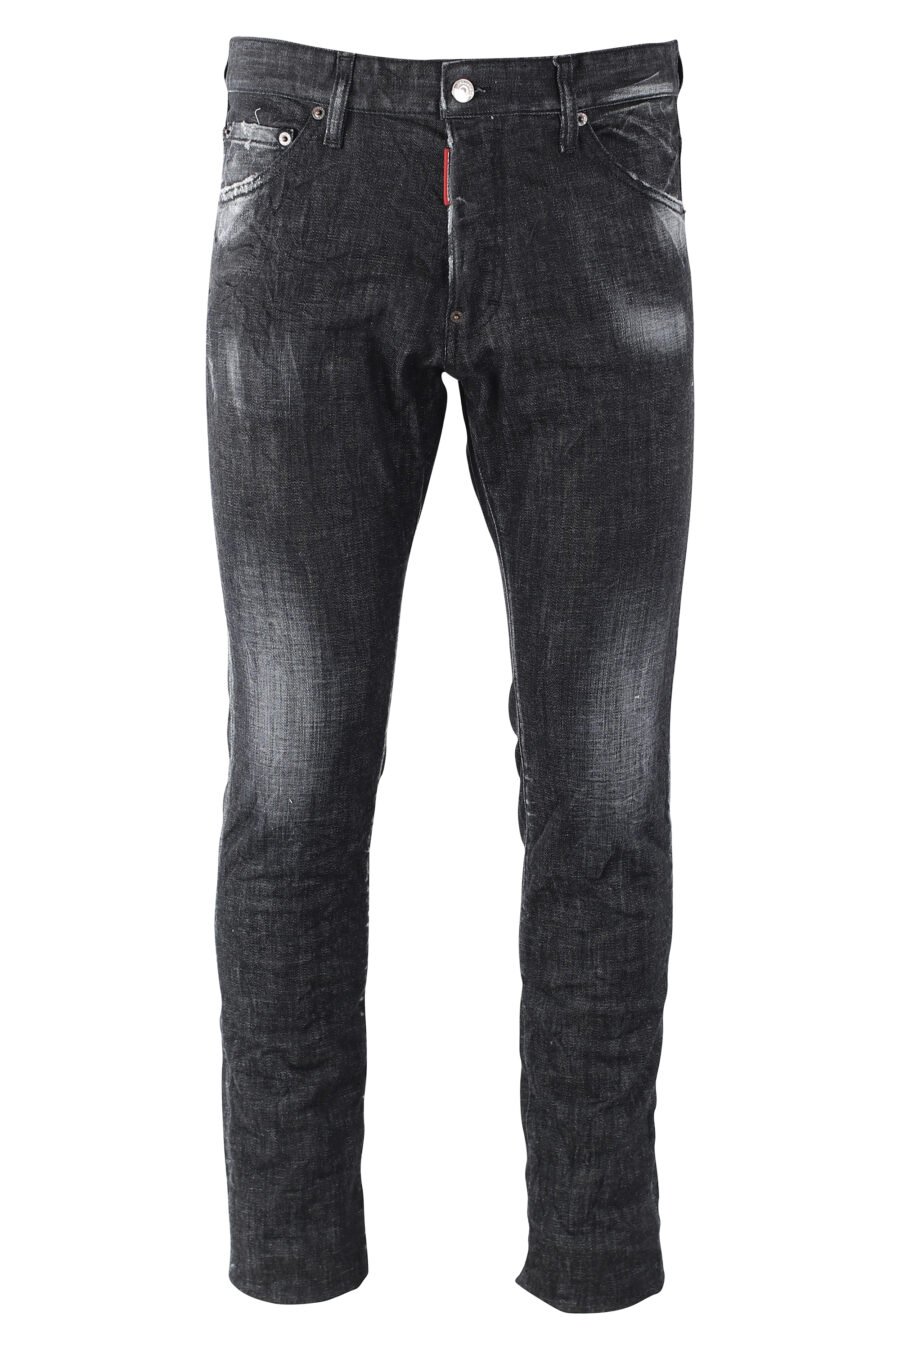 Pantalon en jean noir semi-usé - IMG 9699